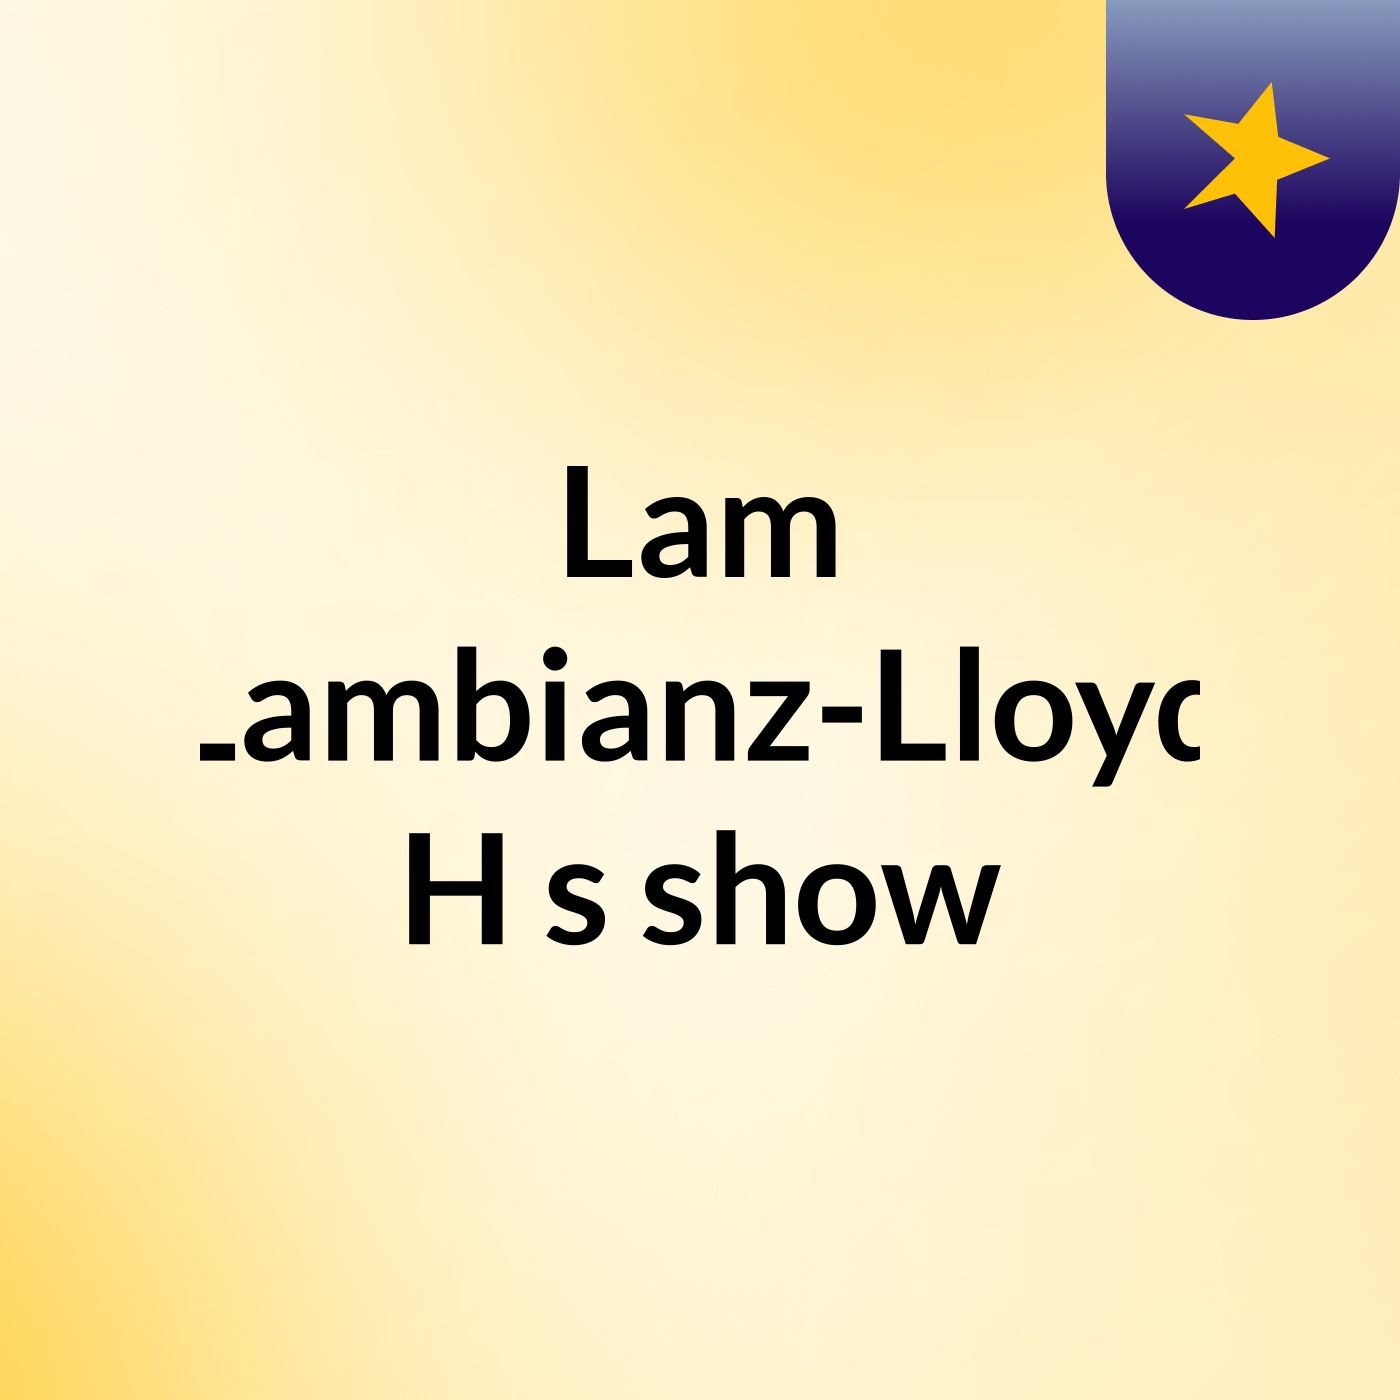 Episode 2 - Lam Lambianz-Lloyd H's show